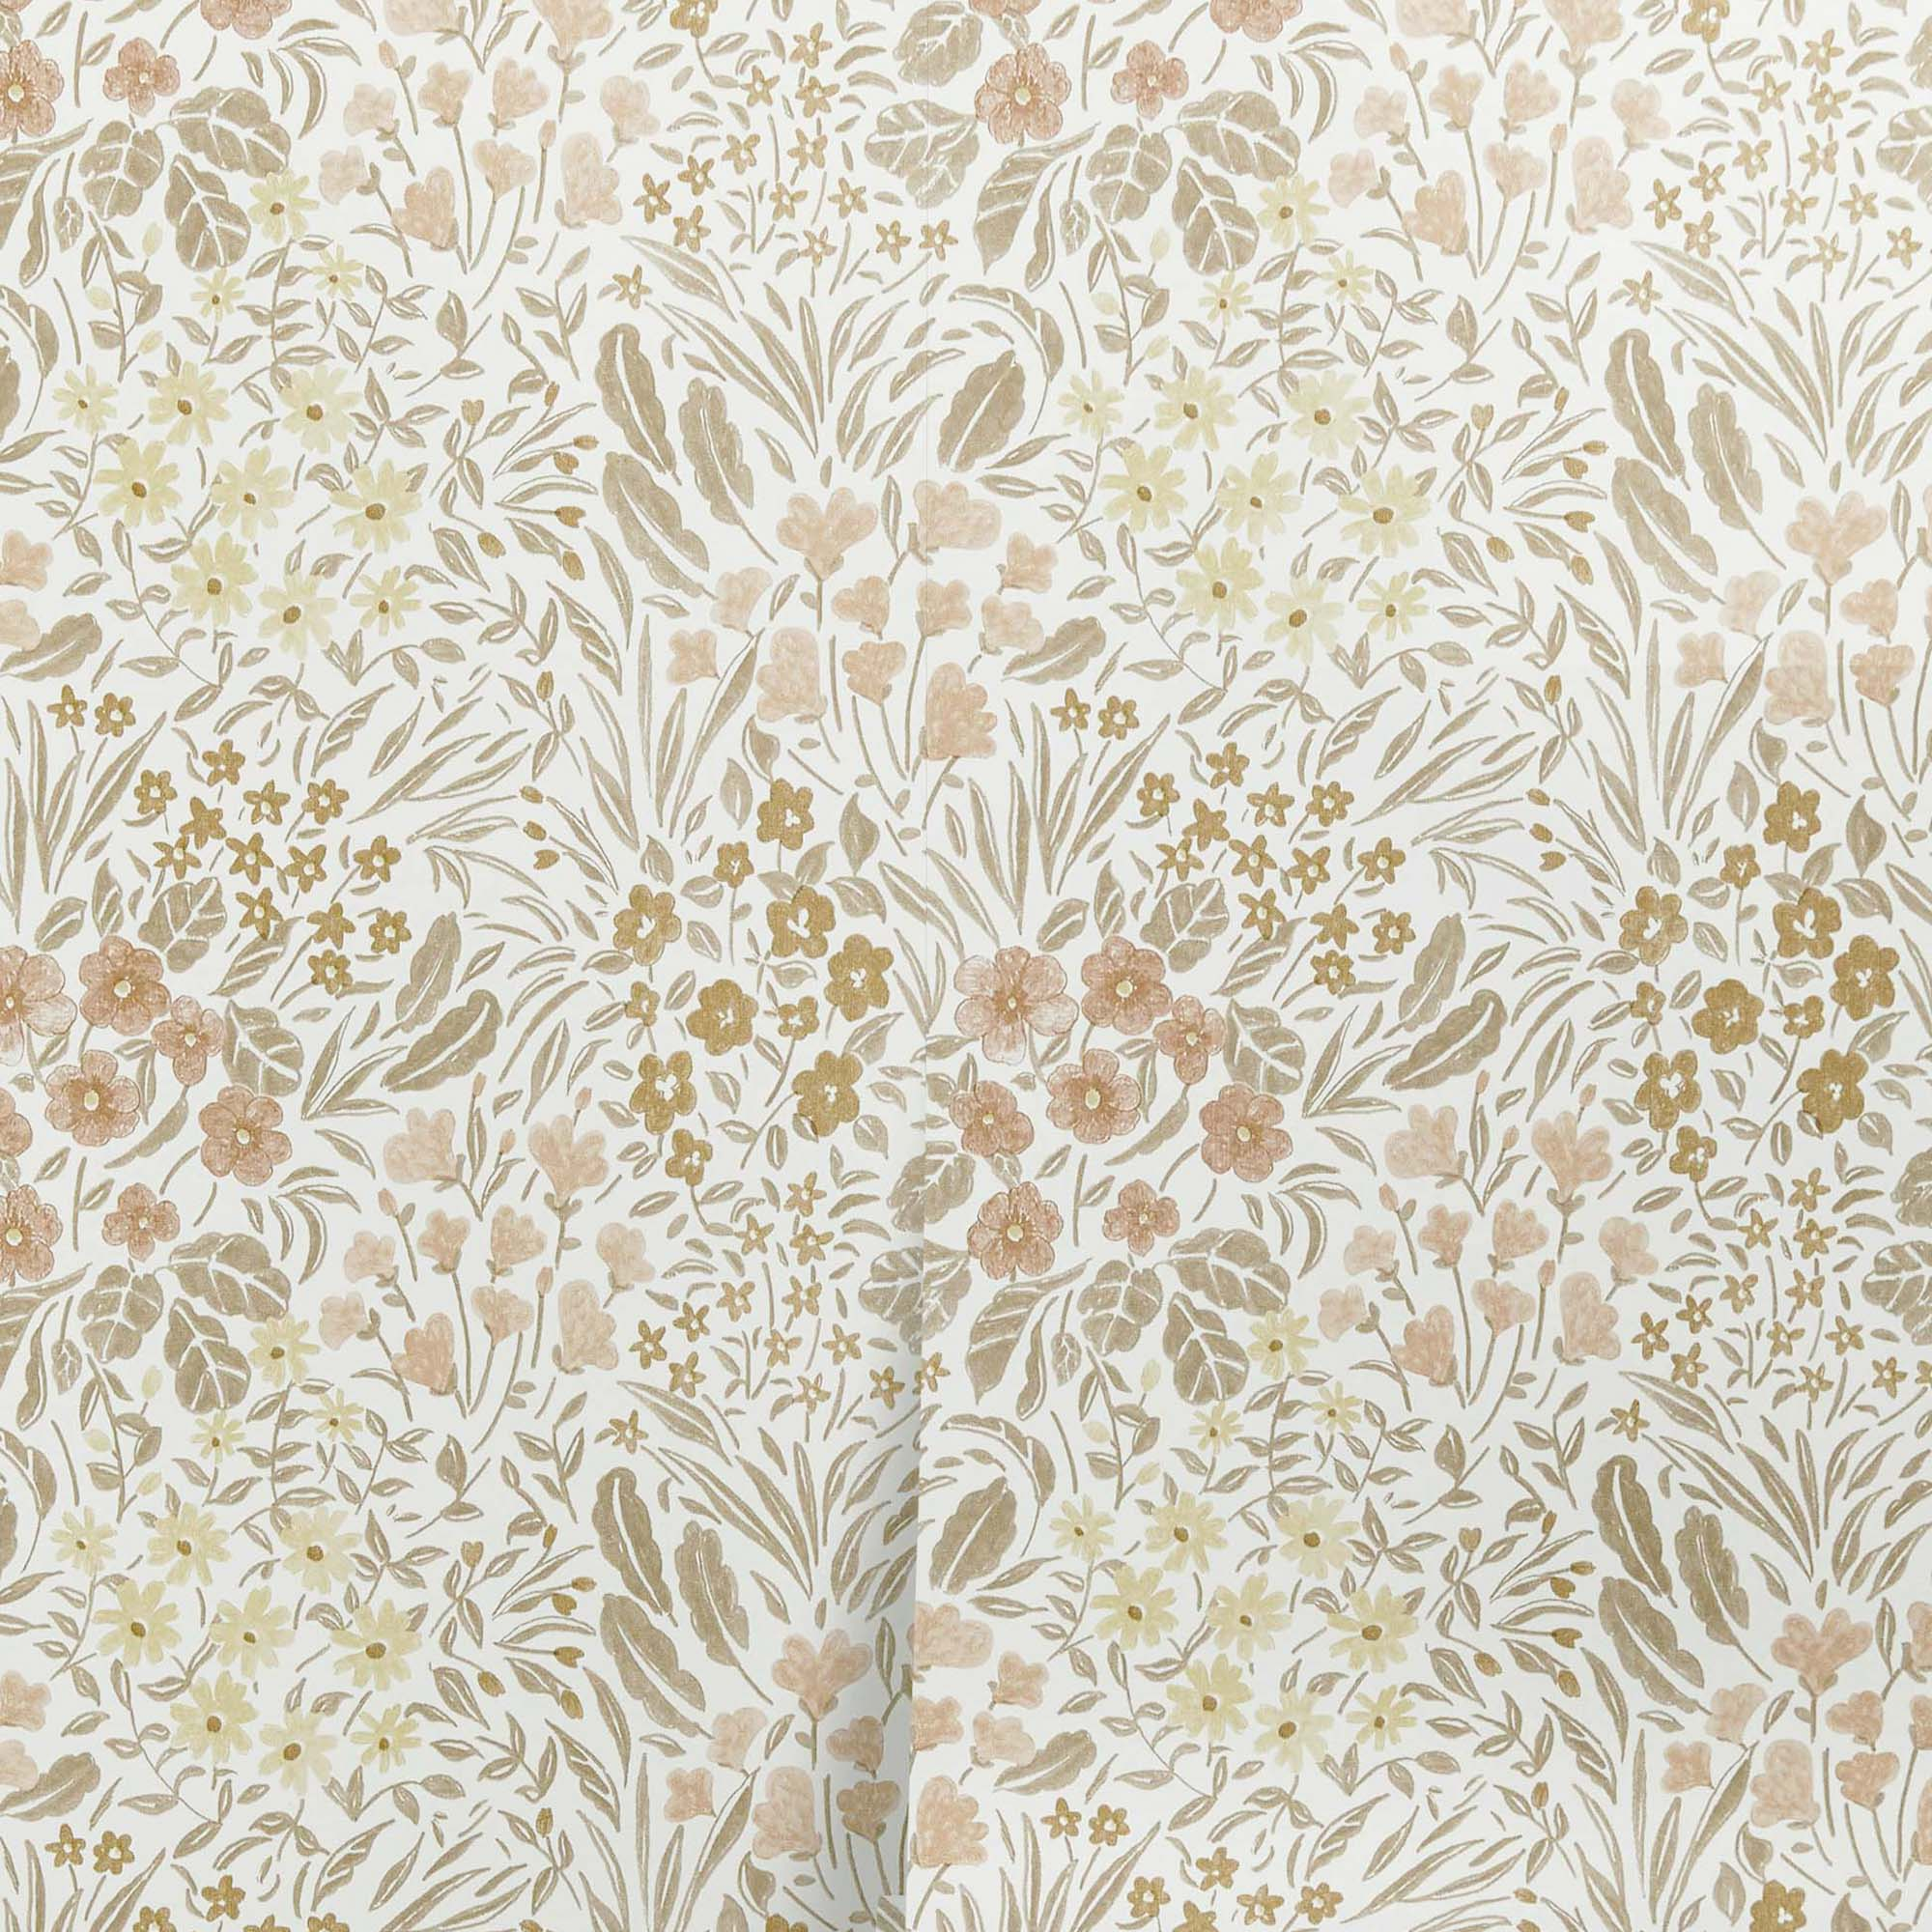 floral/botanical wallpaper